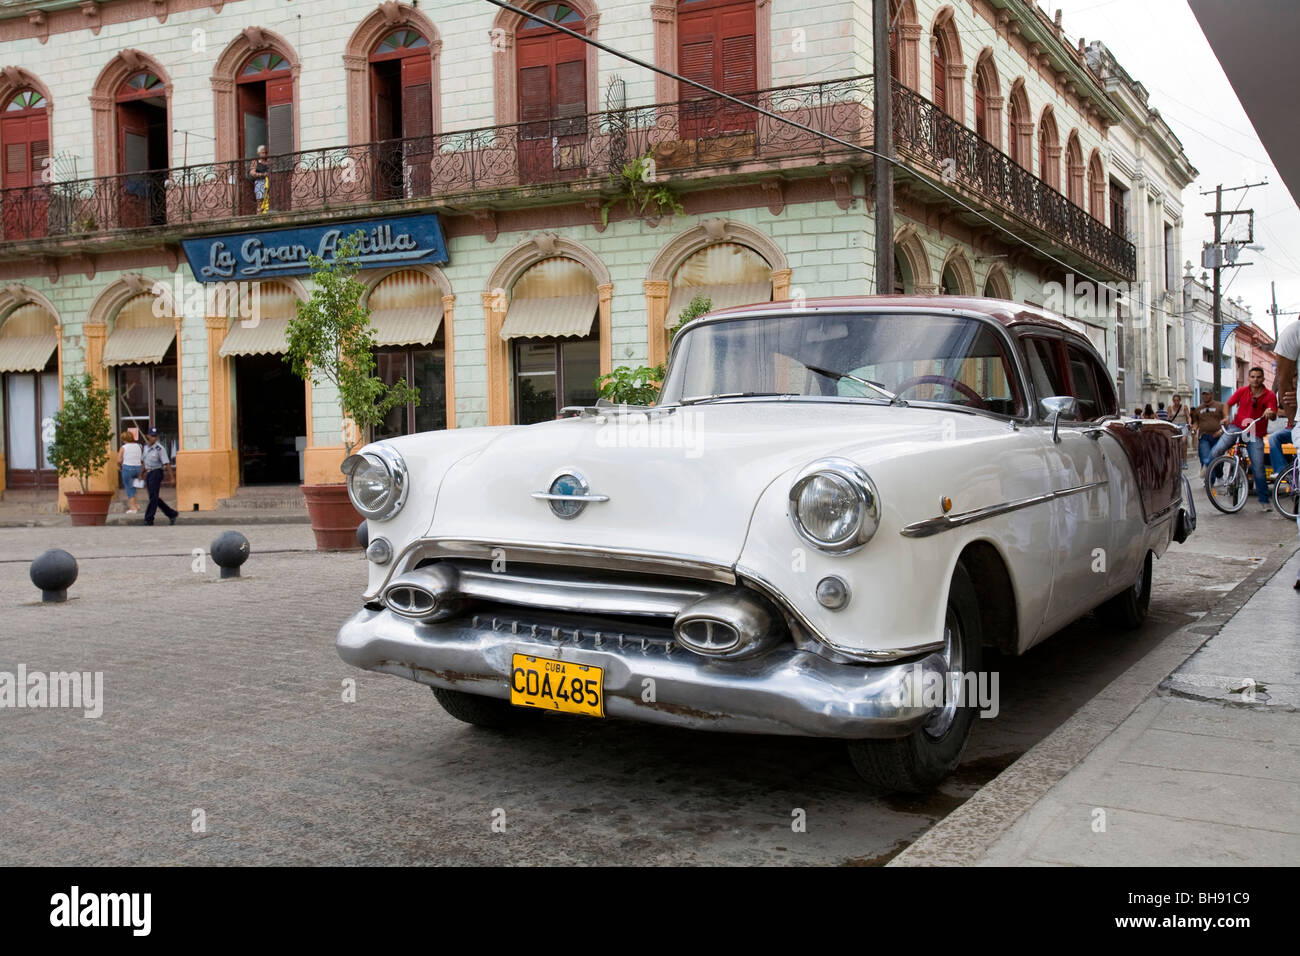 Street Scene with old Limousine, Camagueey, Caribbean Sea, Cuba Stock Photo